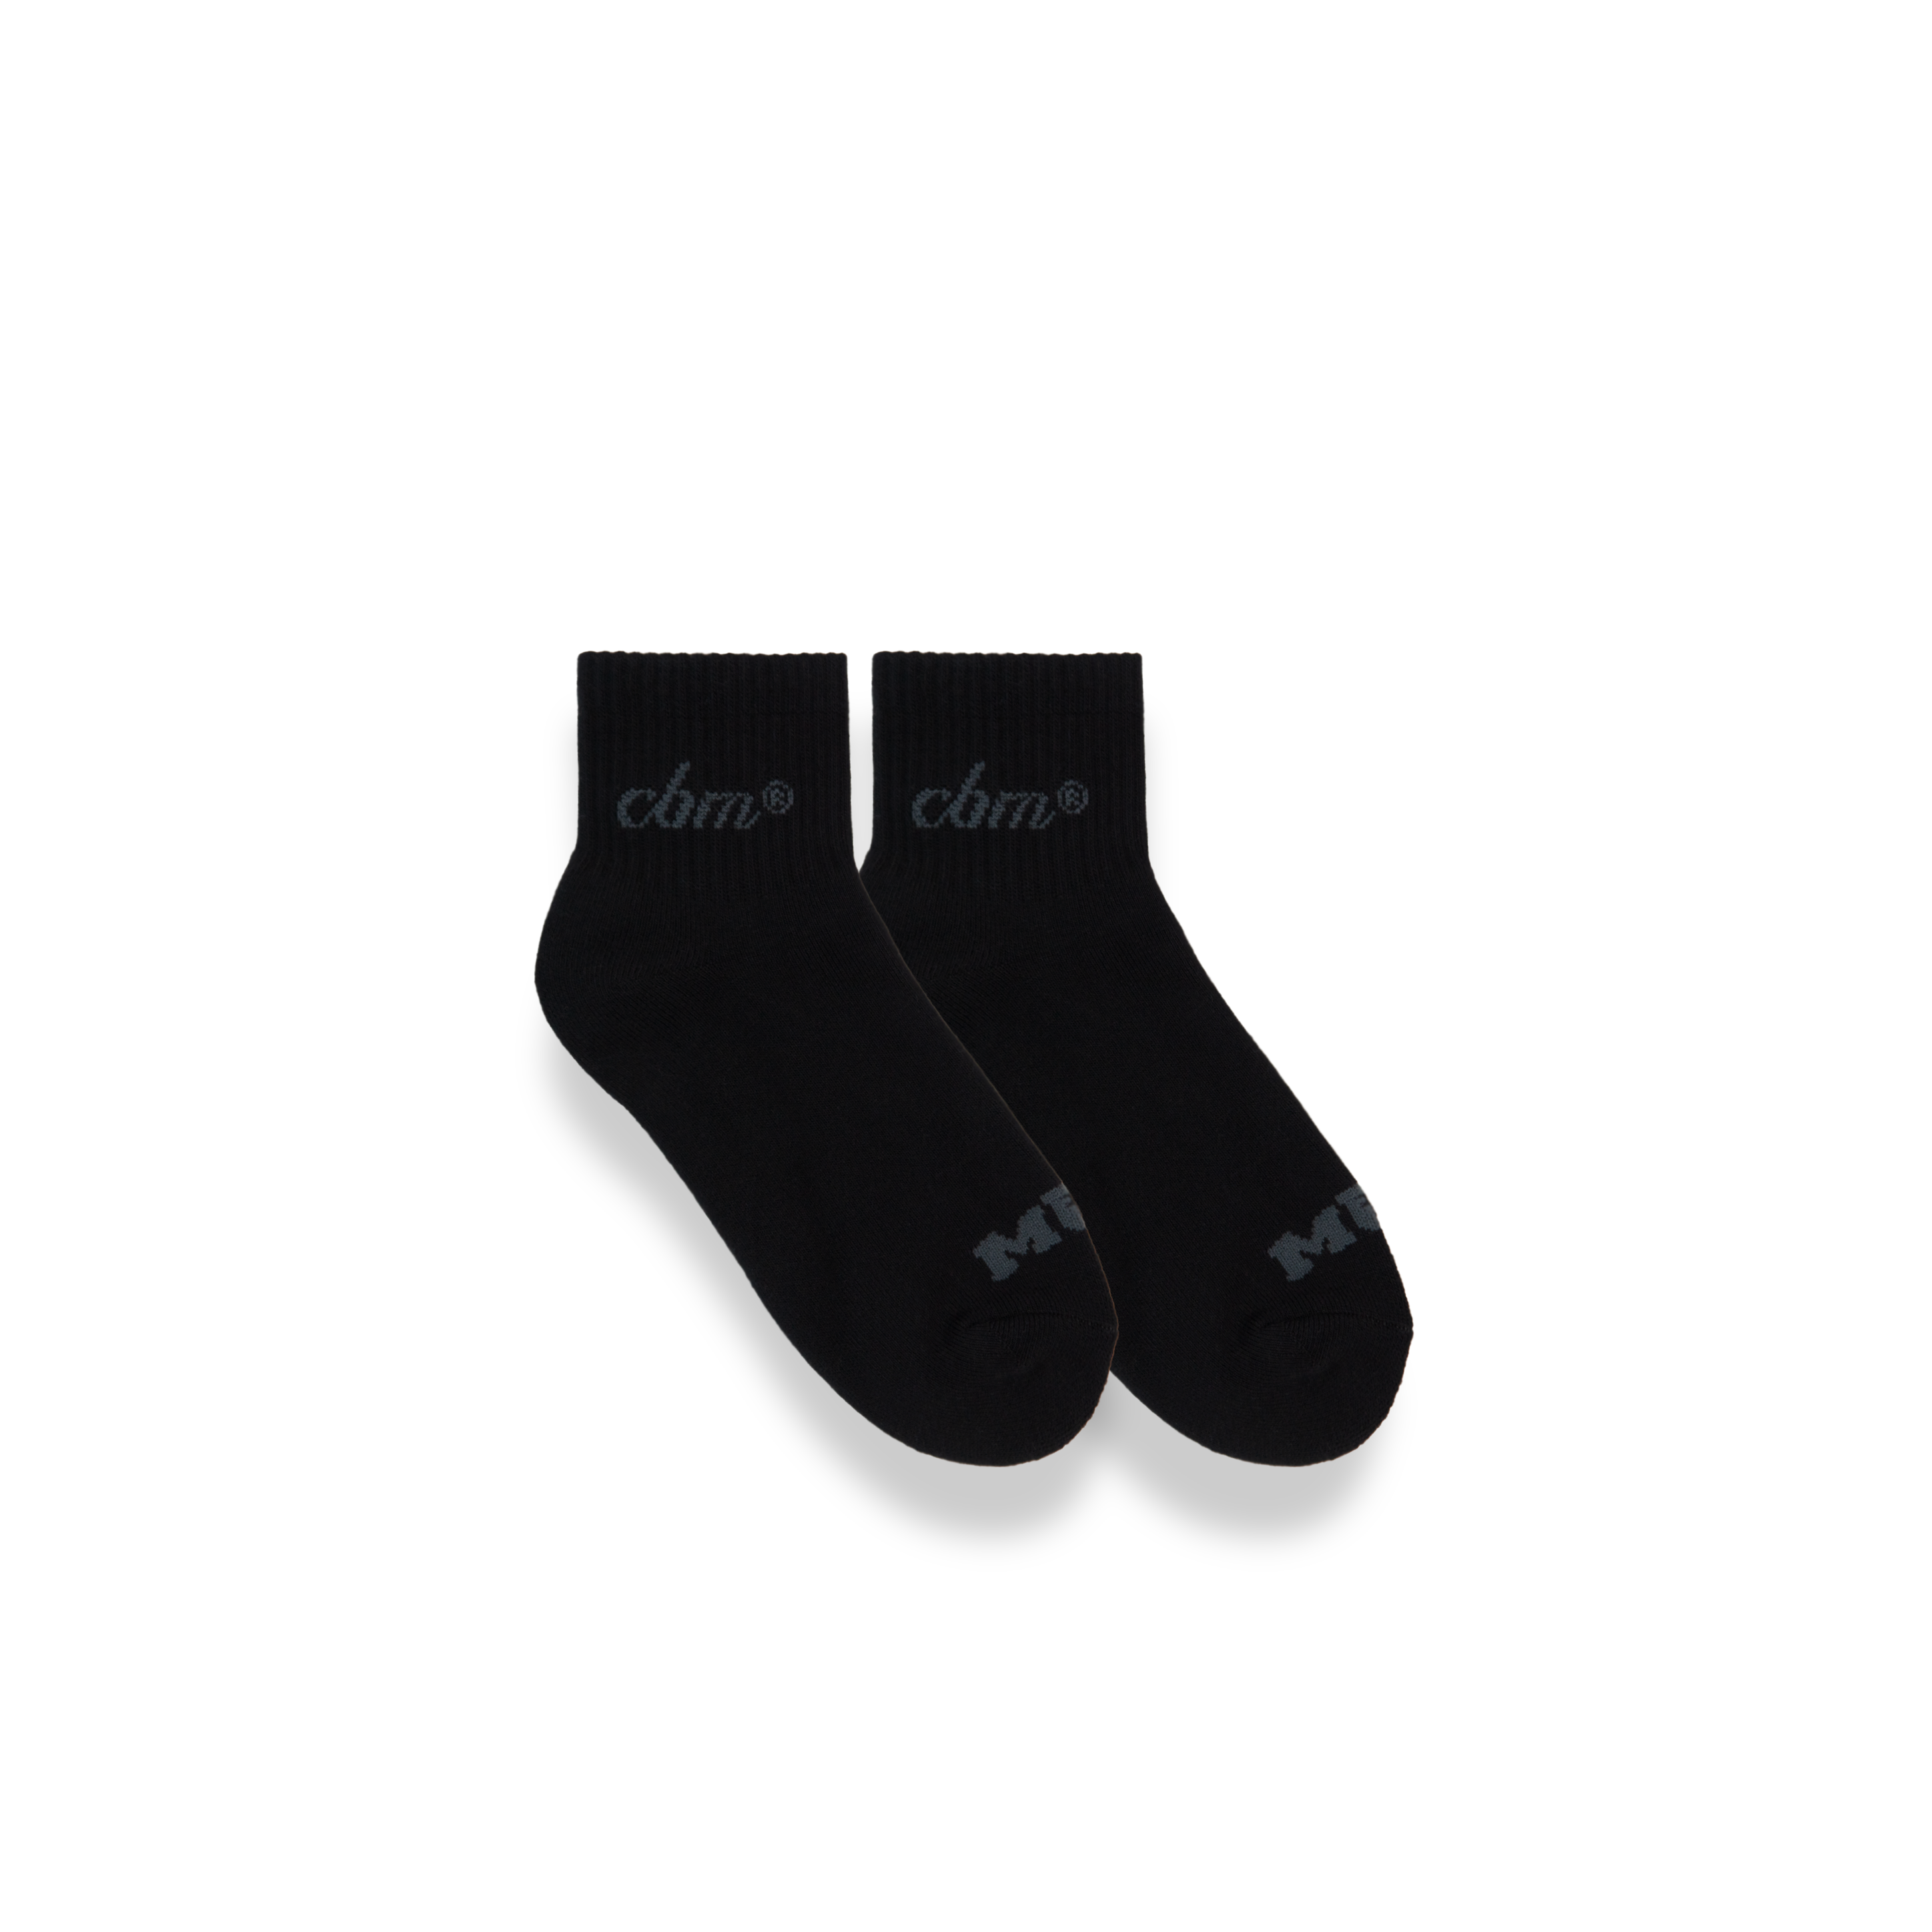 Crew socks 3" - Black